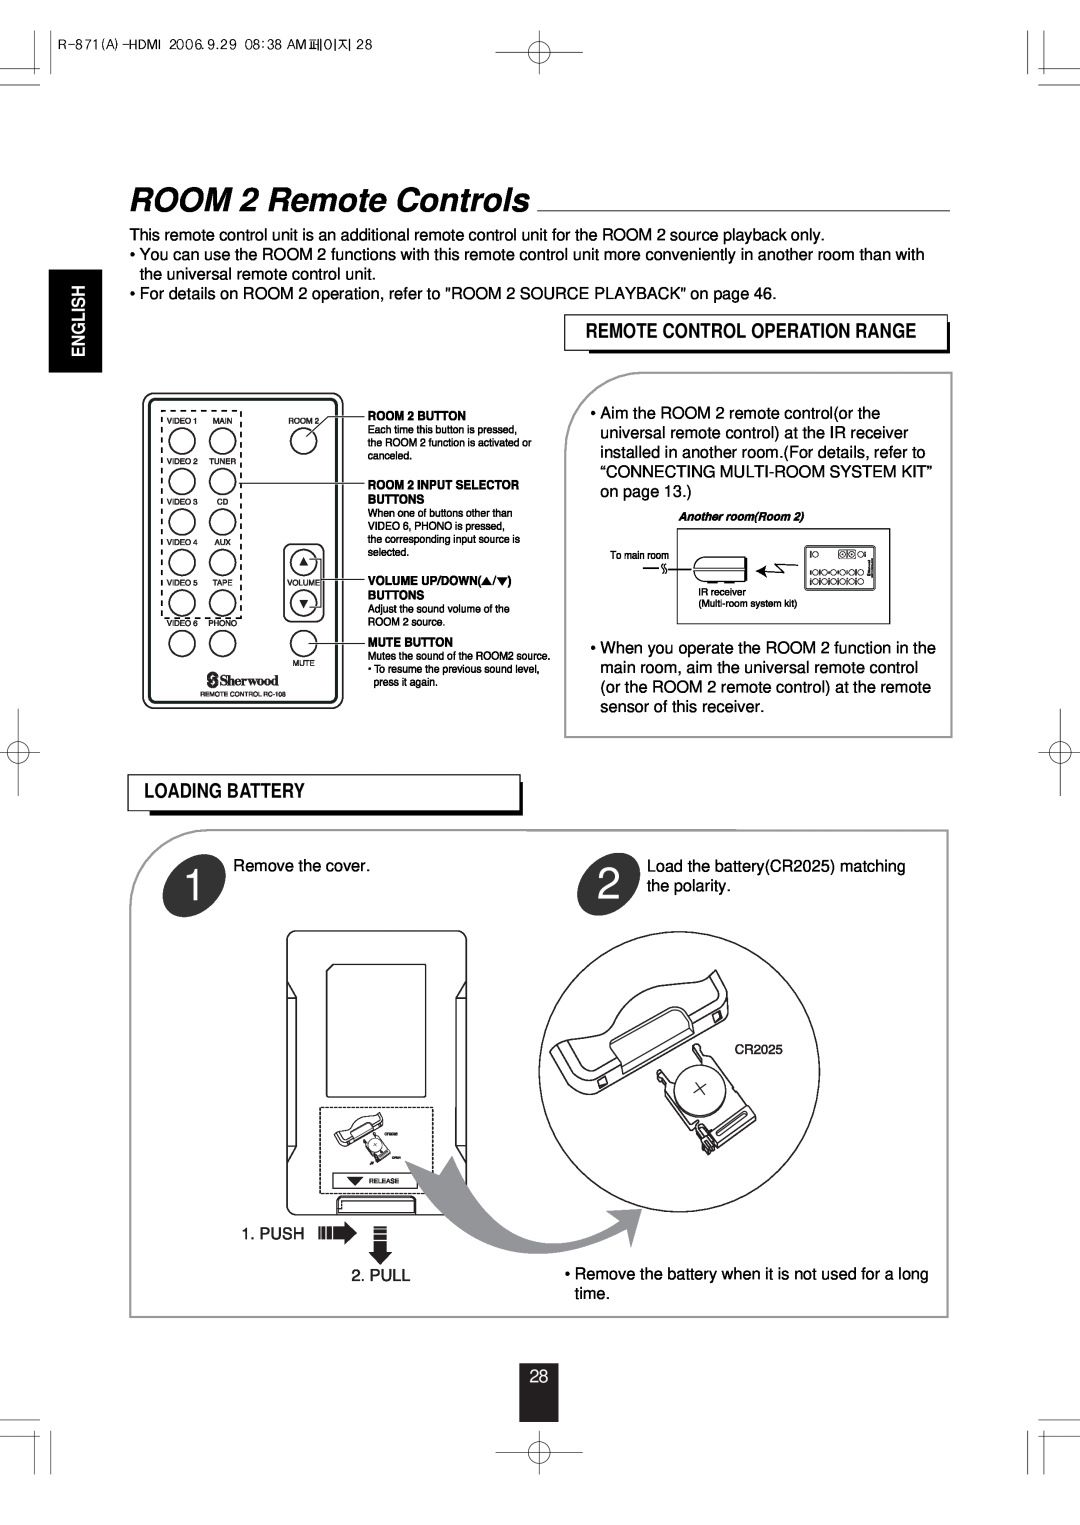 Sherwood R-871 manual ROOM 2 Remote Controls, Remote Control Operation Range, Loading Battery, English 